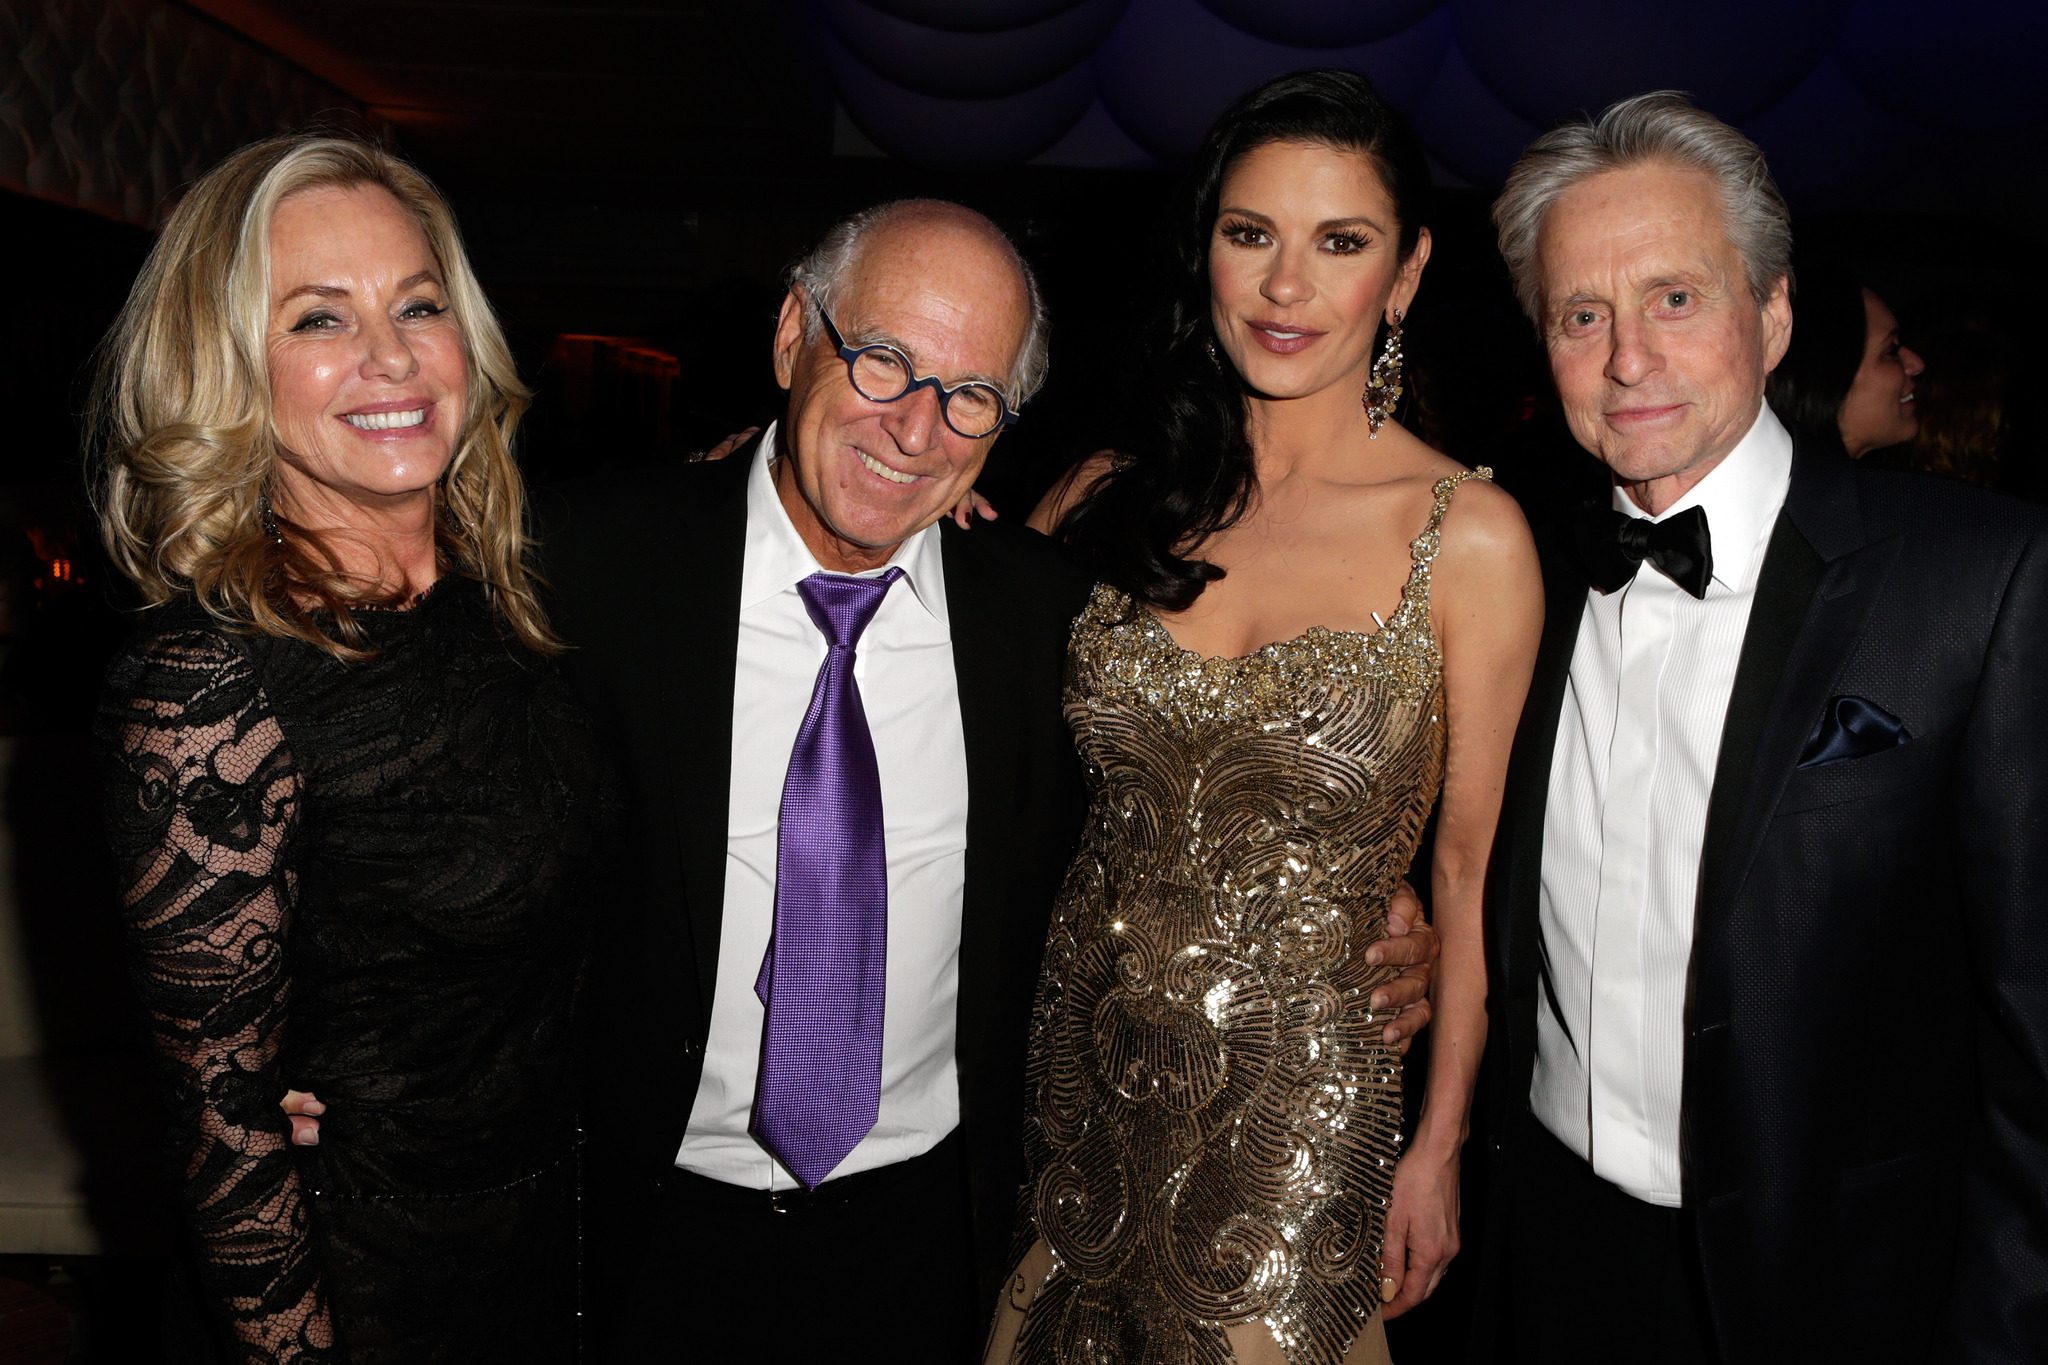 Michael Douglas, Catherine Zeta-Jones and Jimmy Buffett